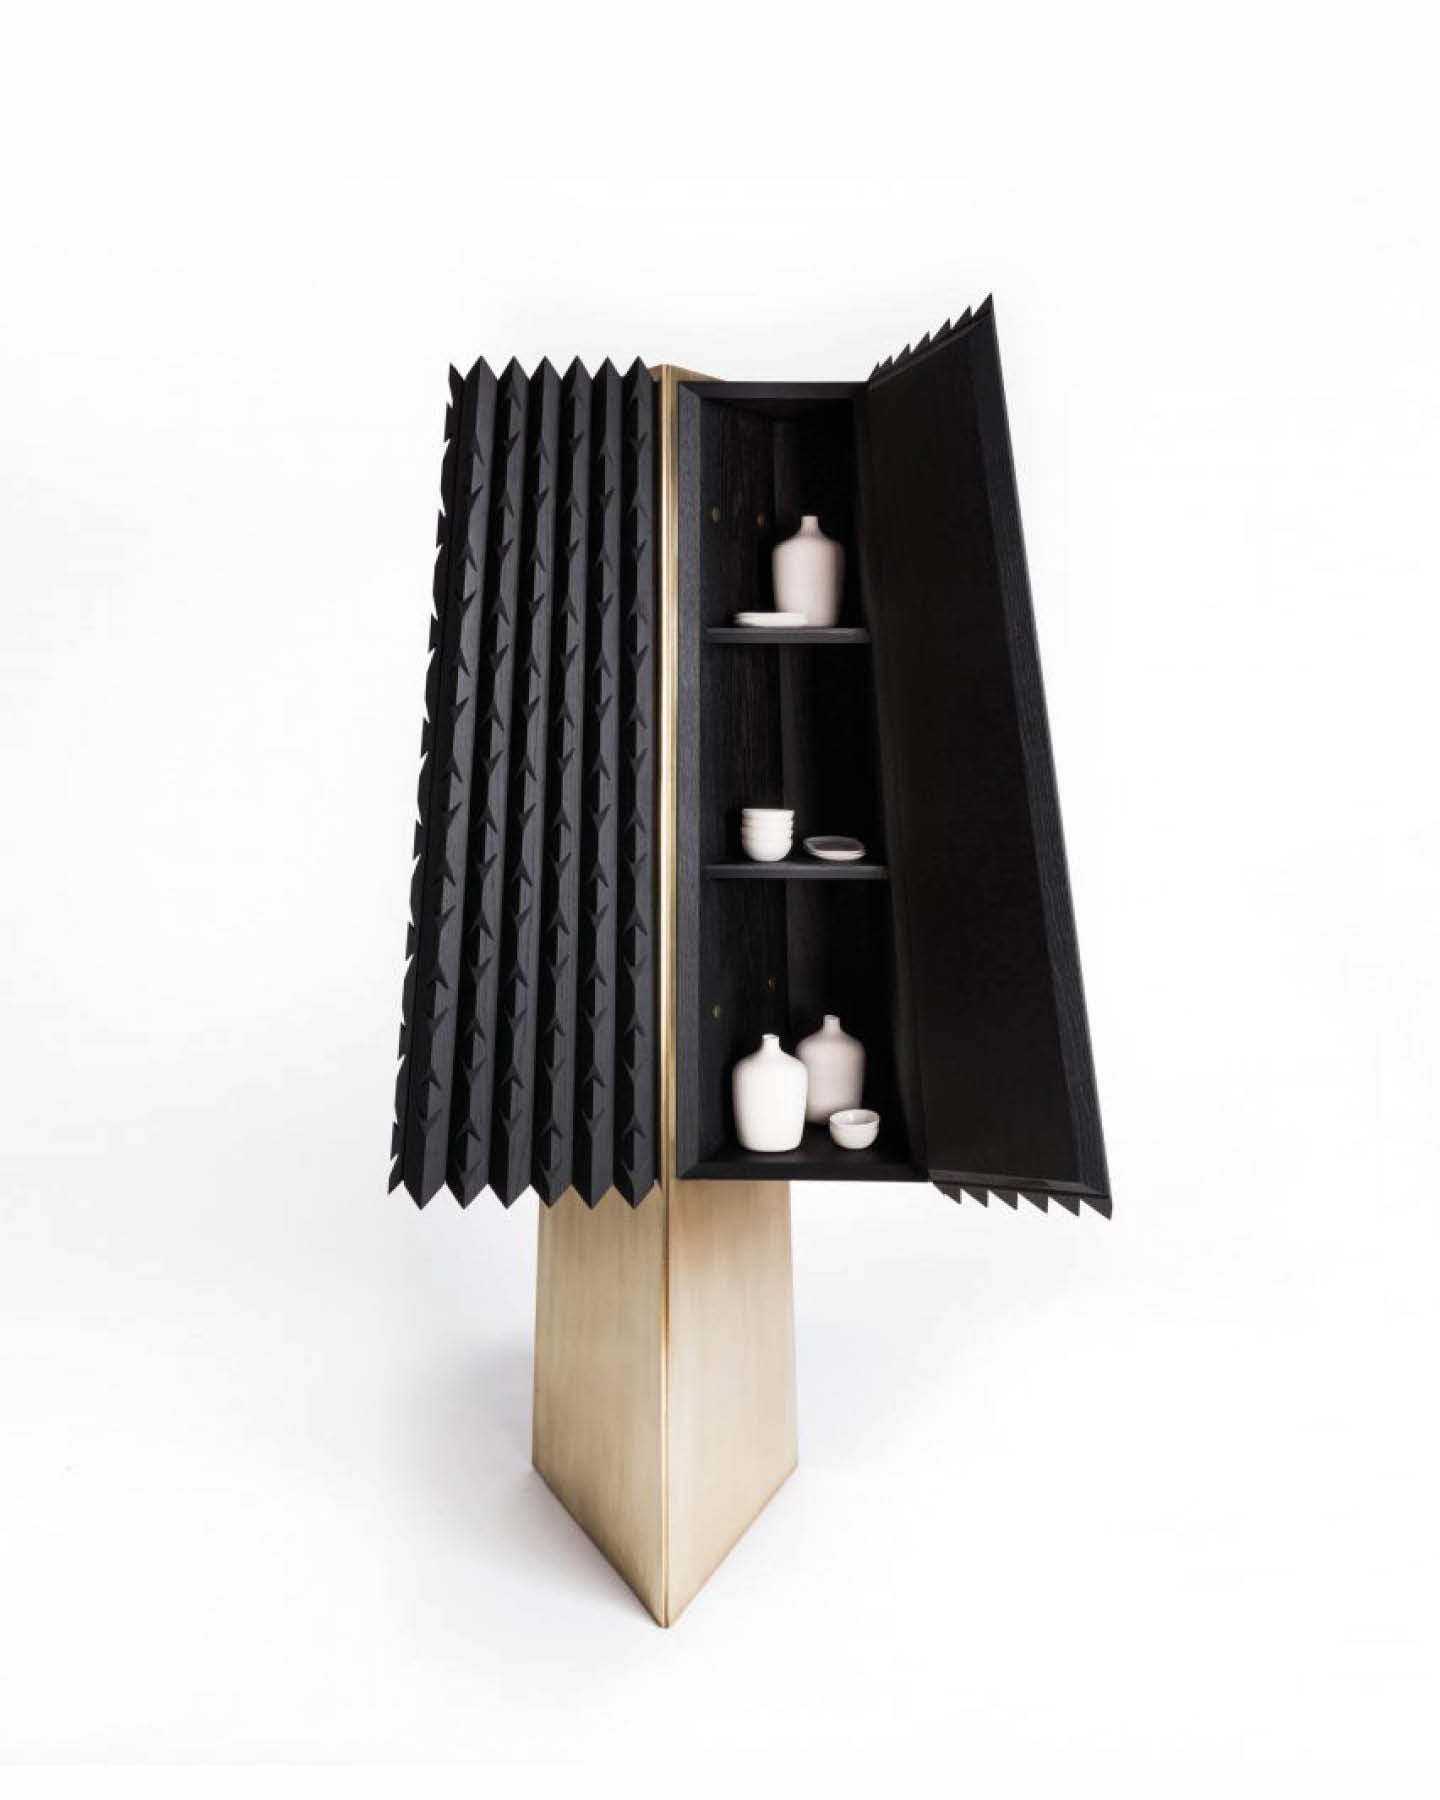 Agave Cabinet, By Esrawe Studio